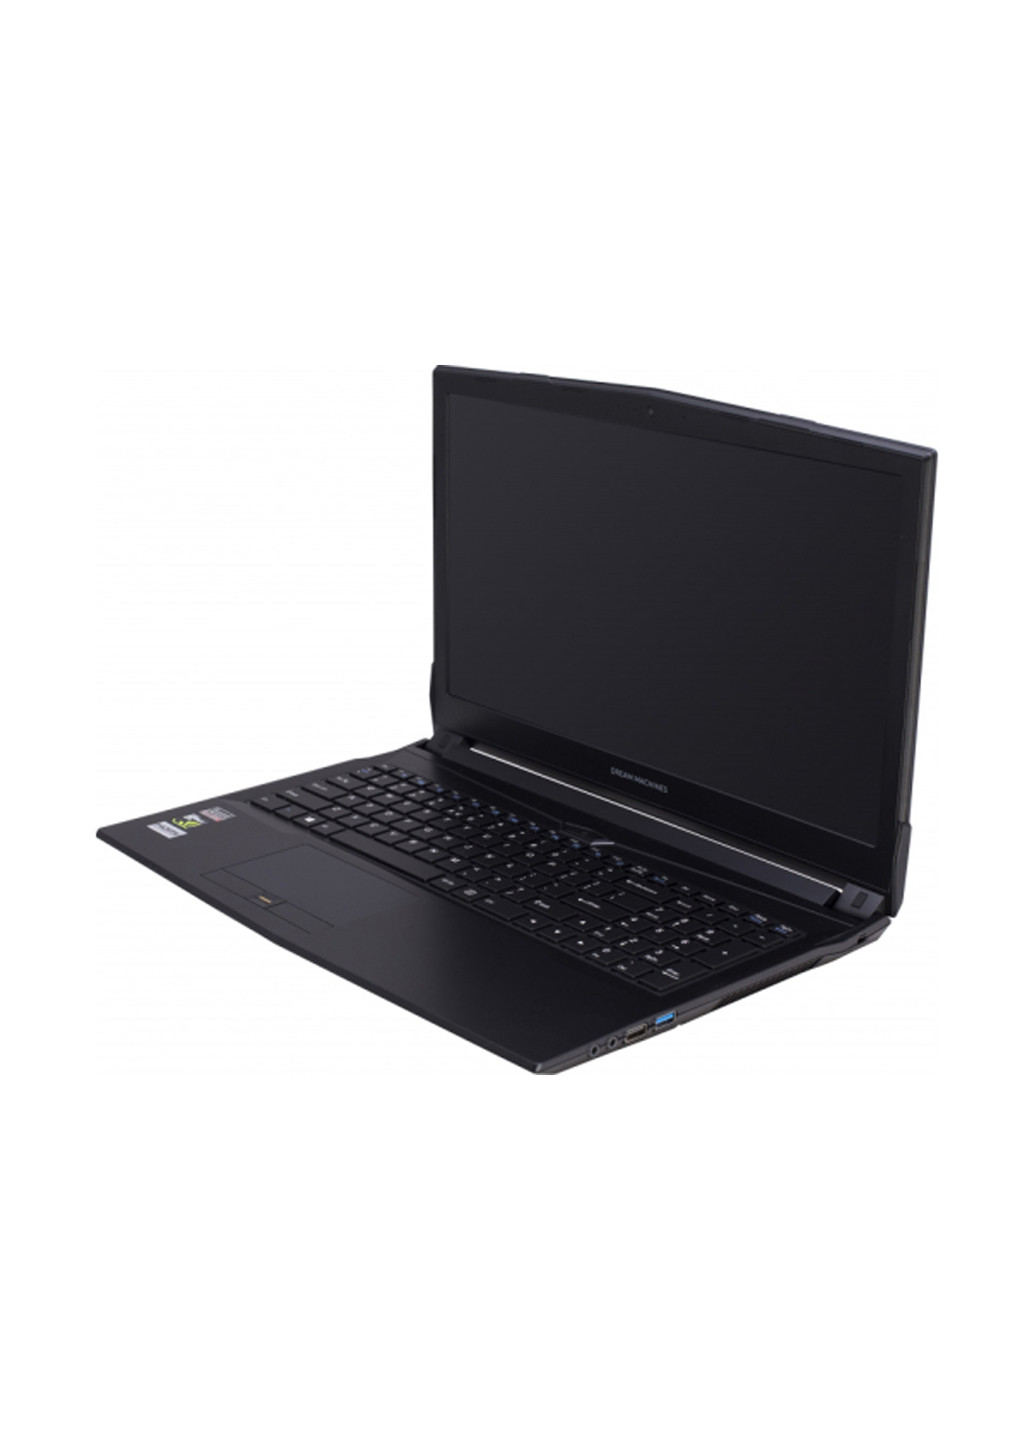 Ноутбук G1050Ti-15 Clevo (G1050TI-15UA42) Black Dream Machines clevo g1050ti-15 (g1050ti-15ua42) black (136402609)